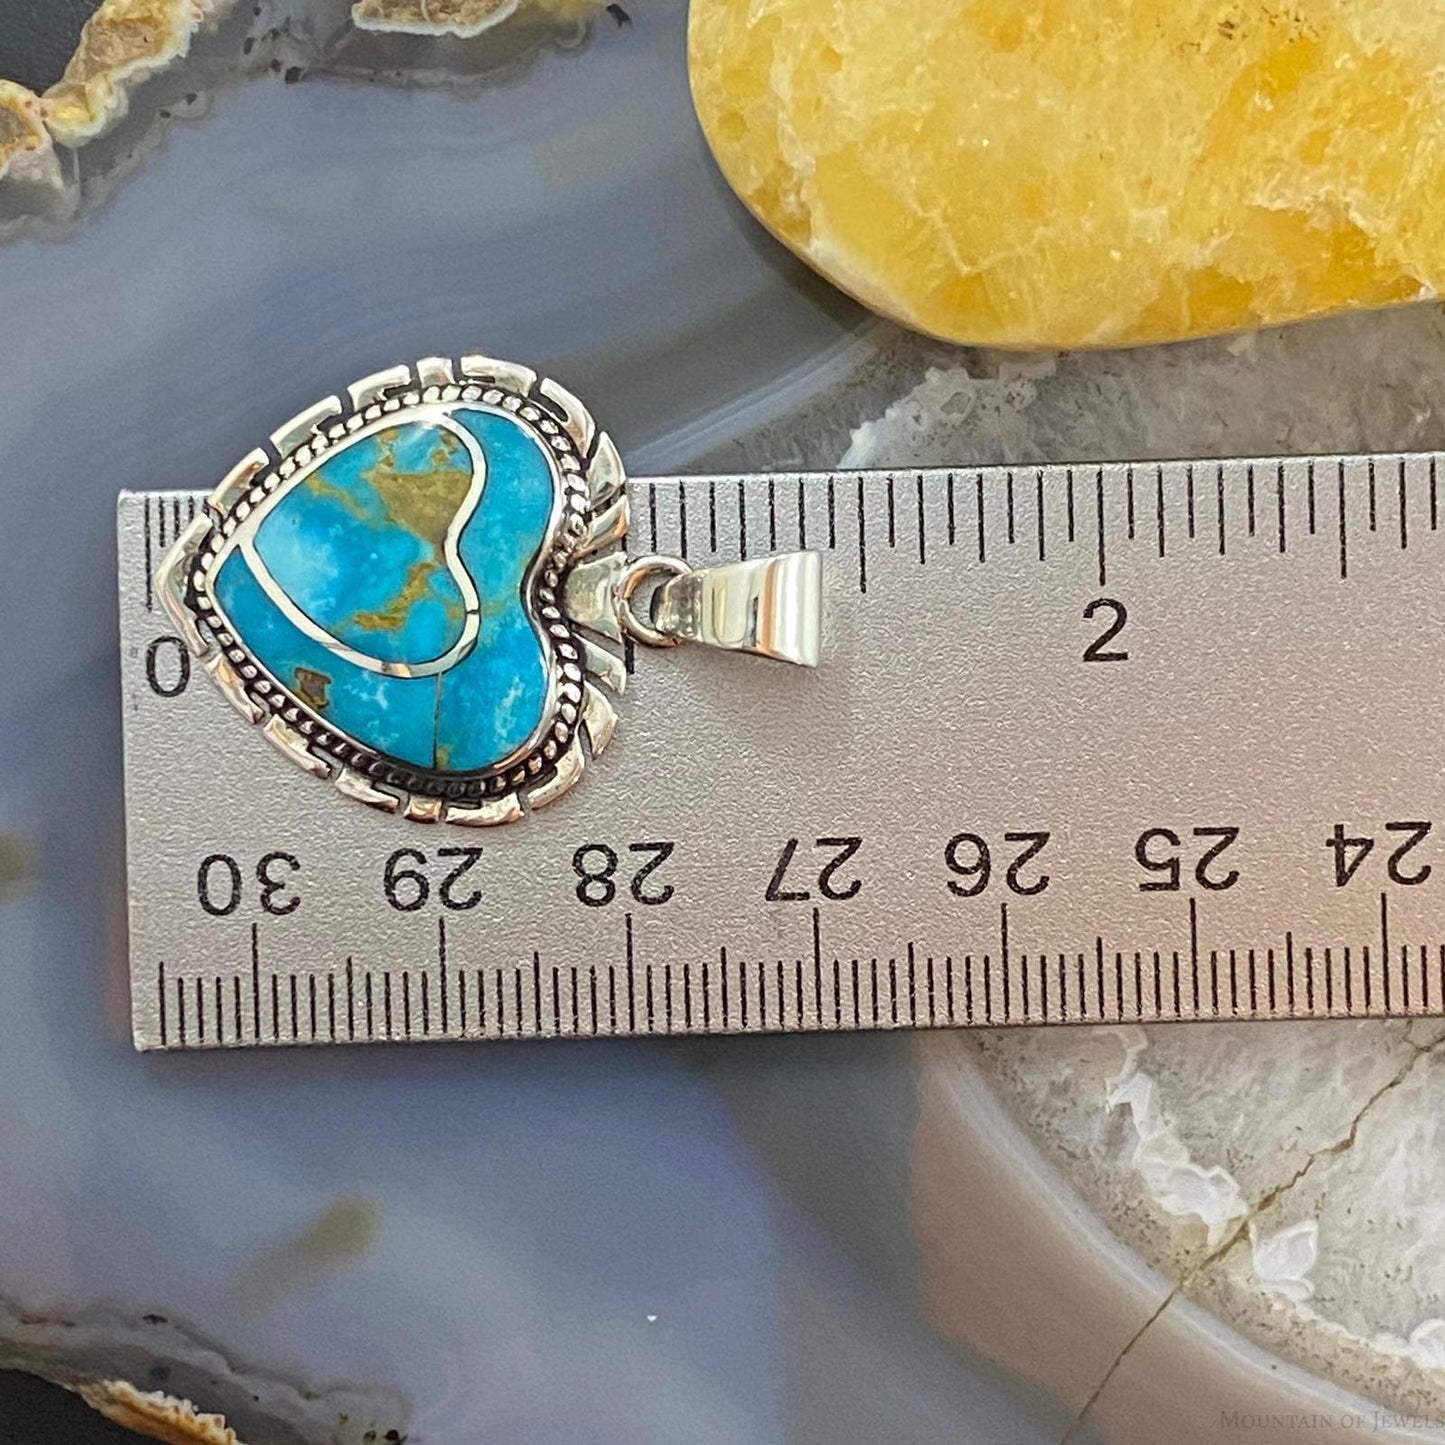 Native American Sterling Blue Ridge Turquoise Double Heart Pendant For Women